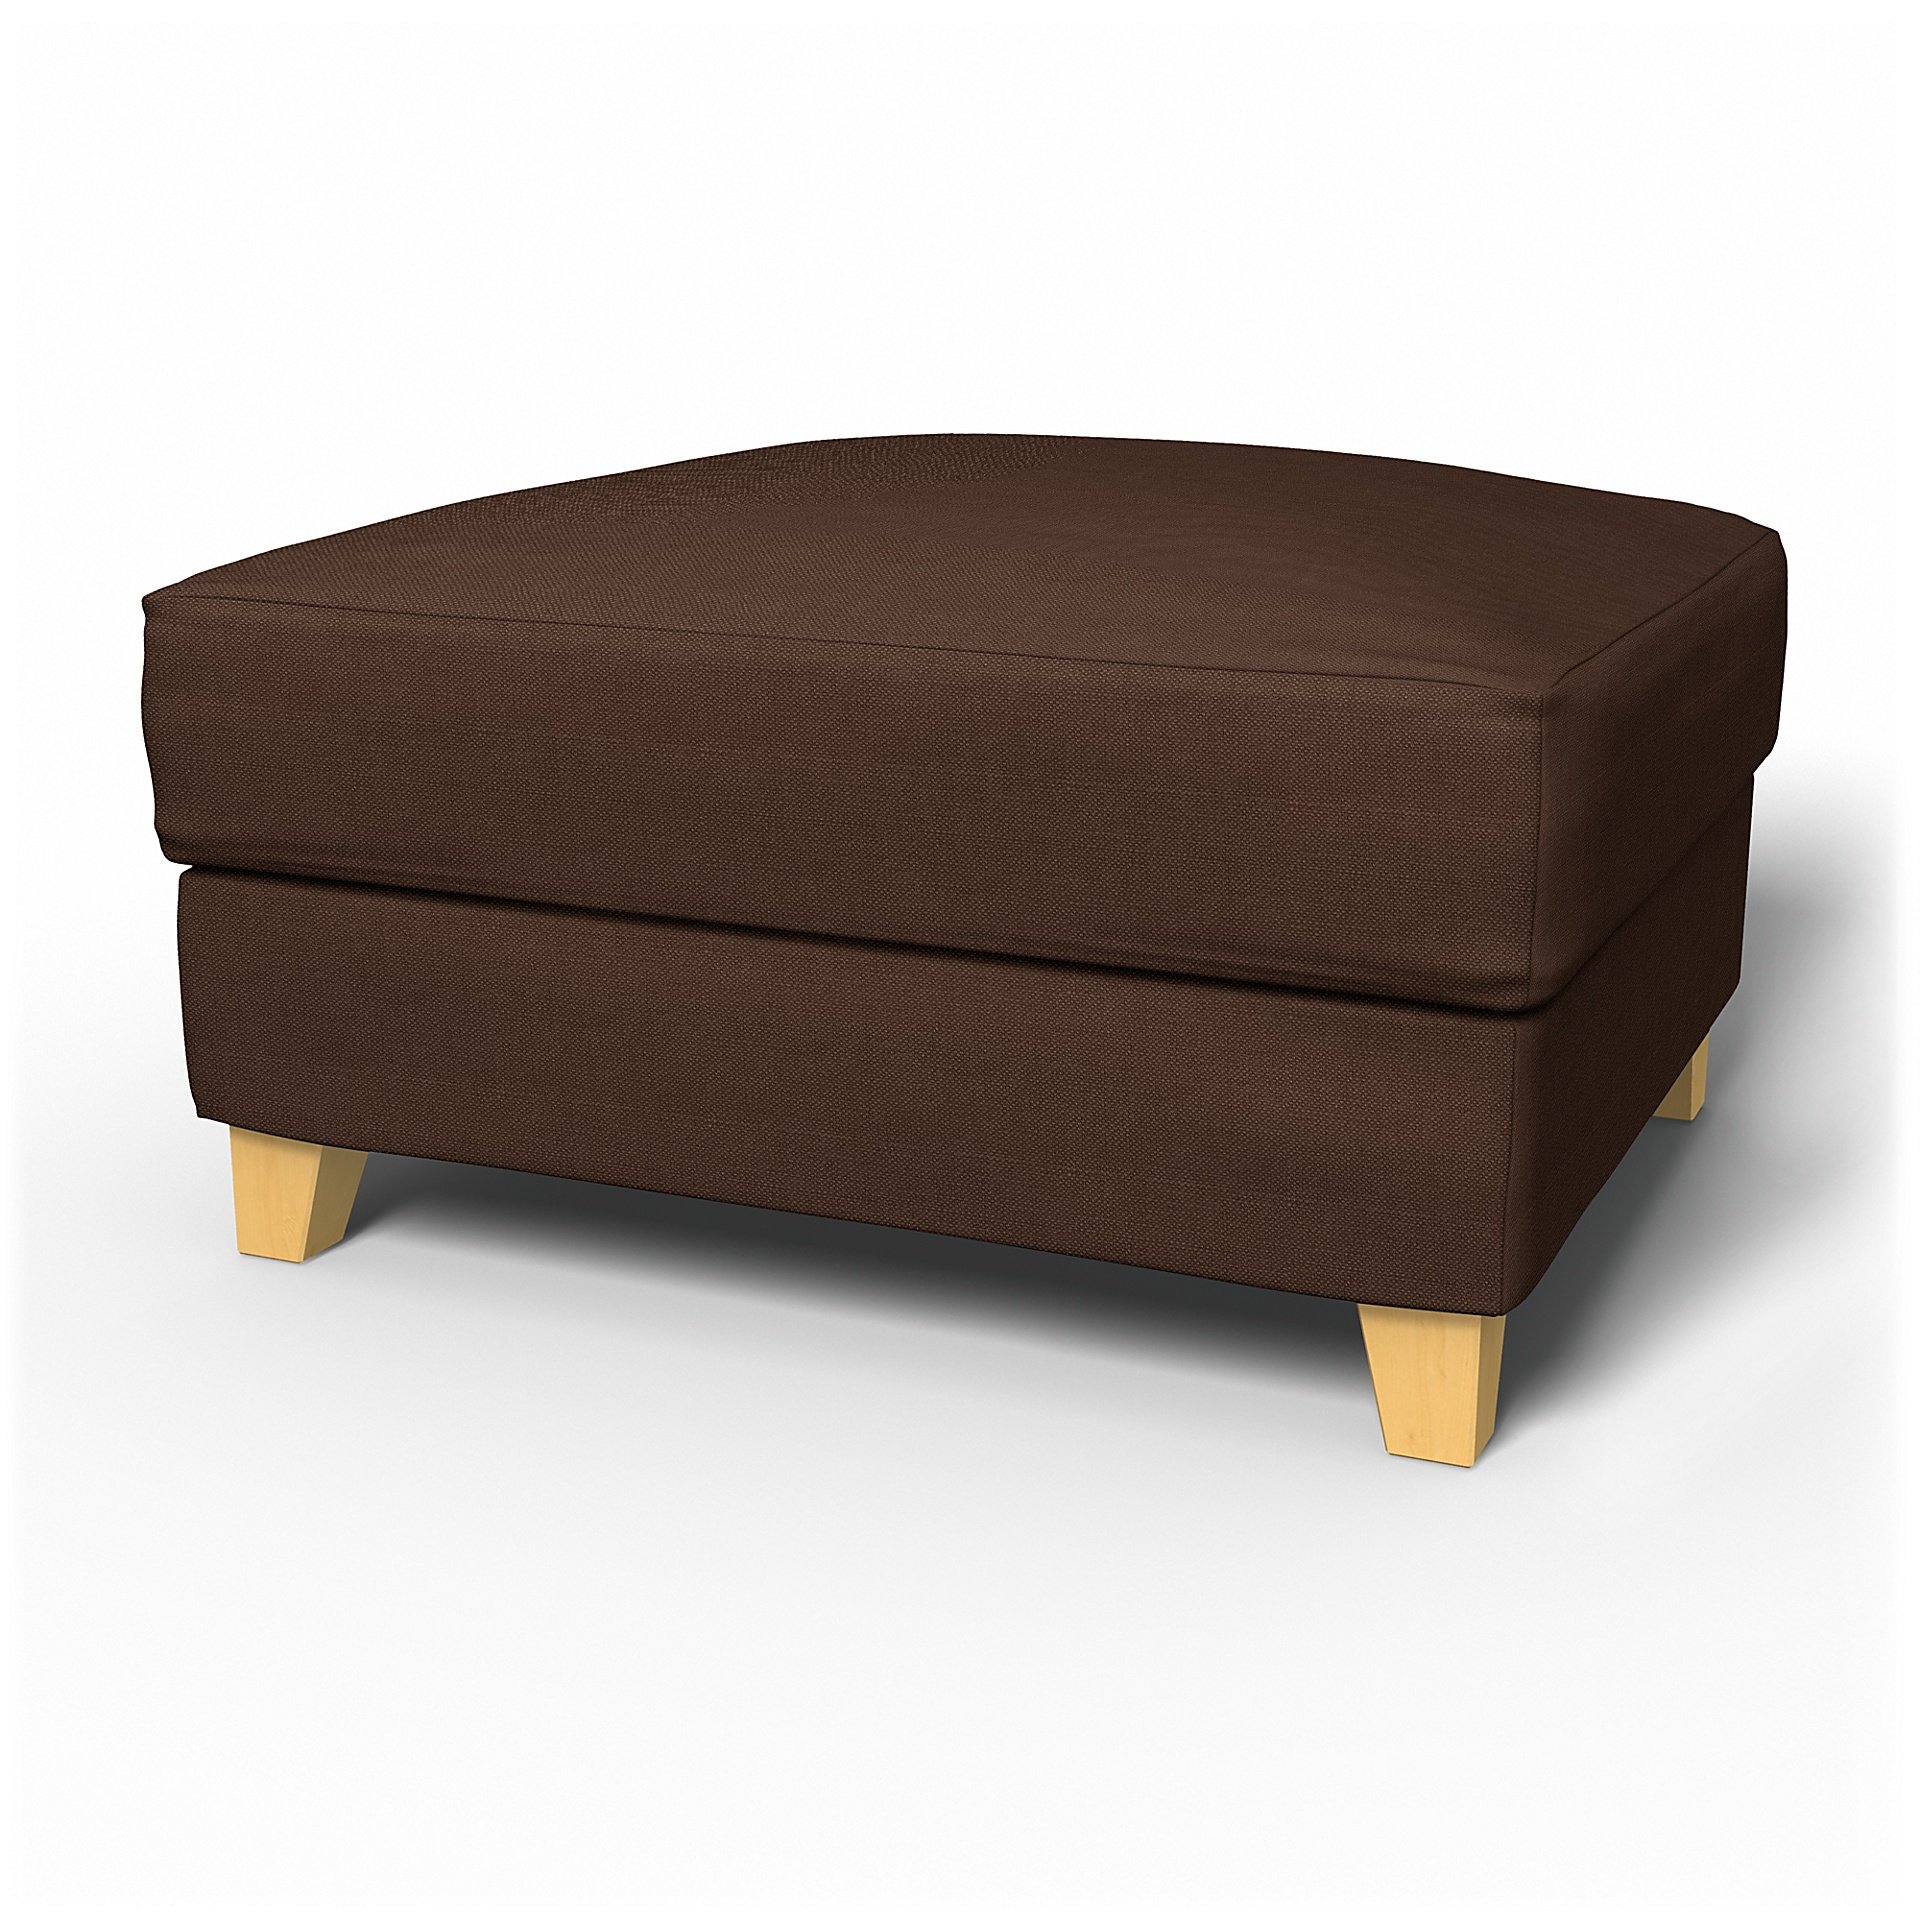 IKEA - Backa Footstool Cover, Chocolate, Linen - Bemz